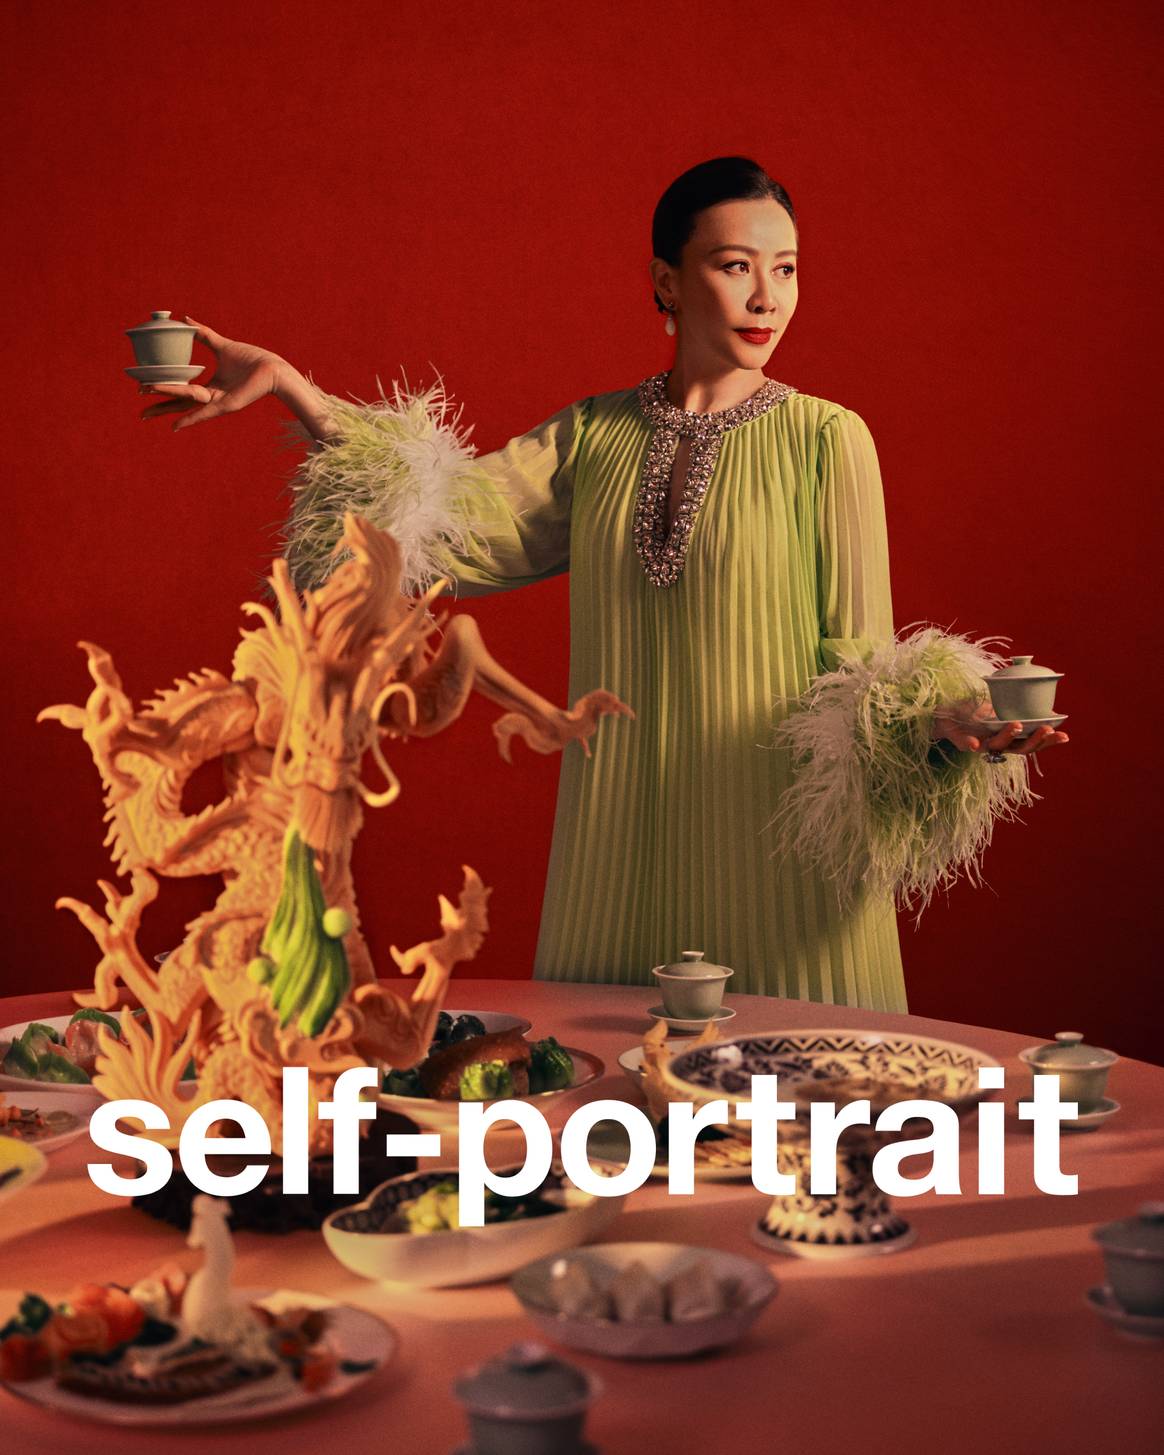 Self-portrait Lunar New Year campaign.